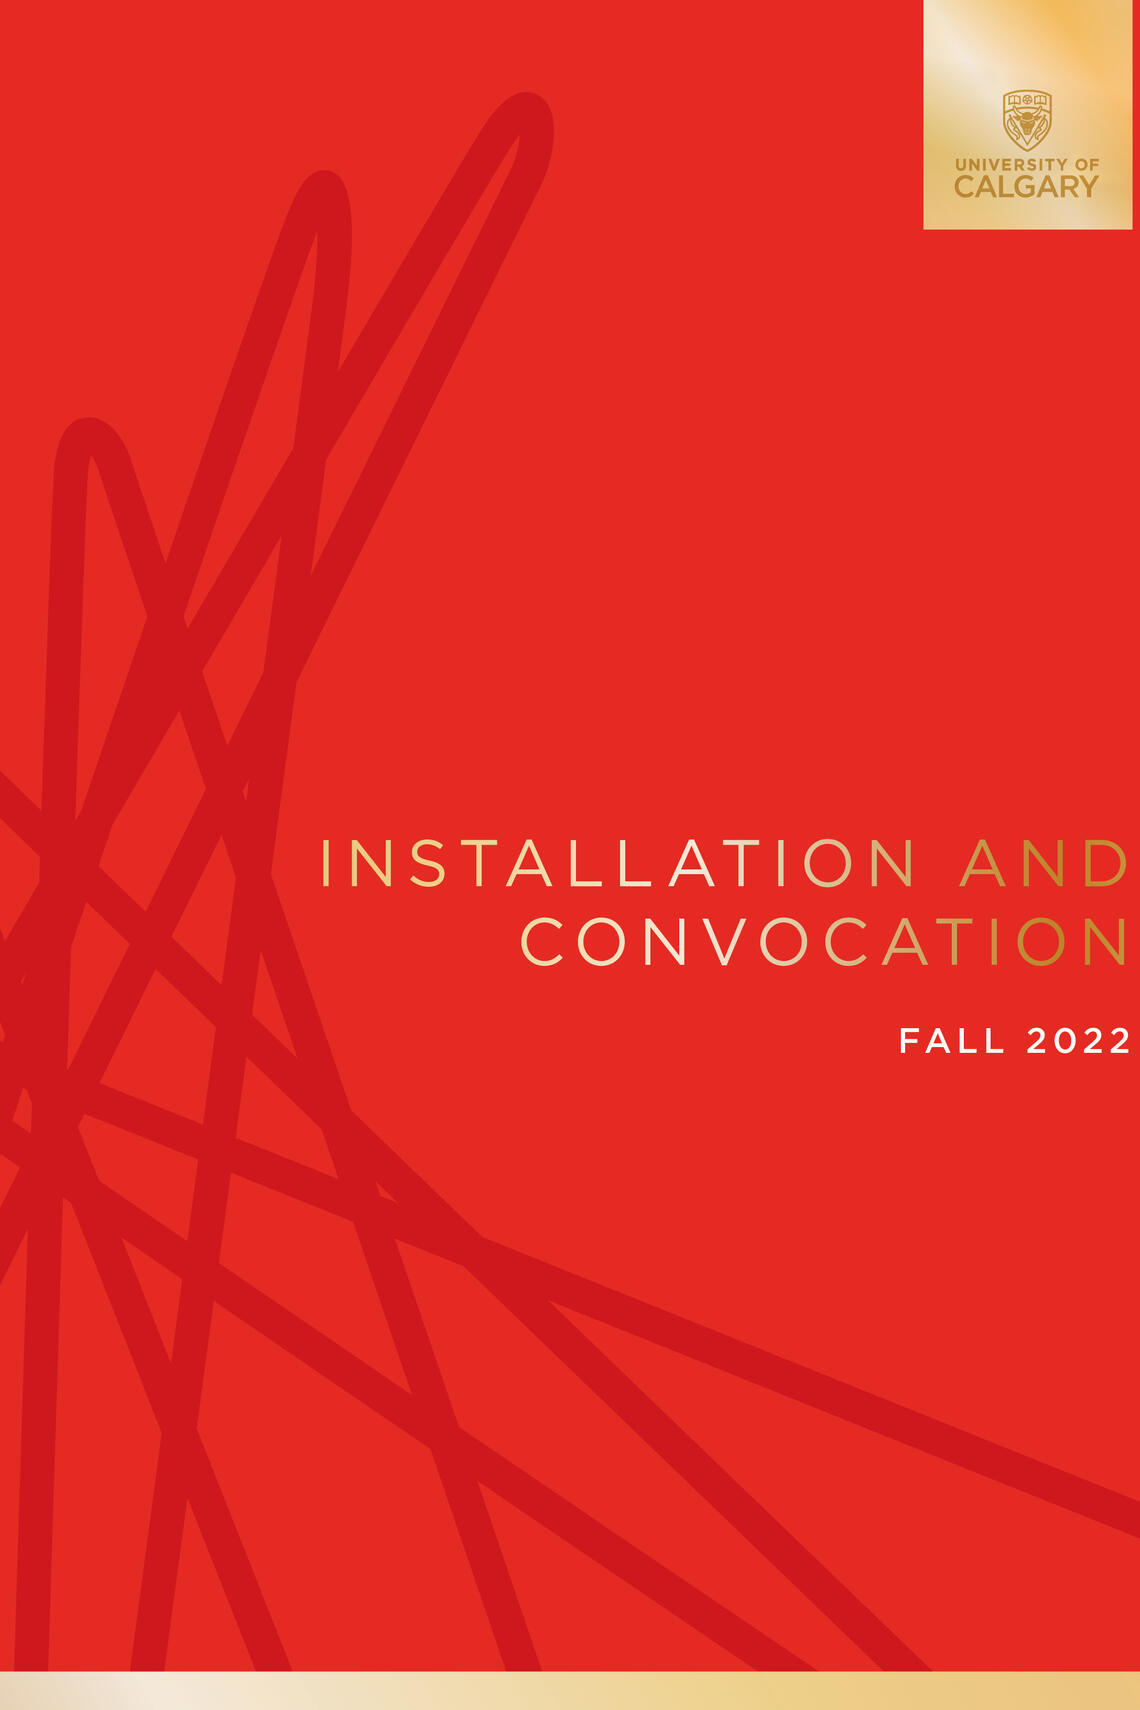 Fall 2022 convocation program